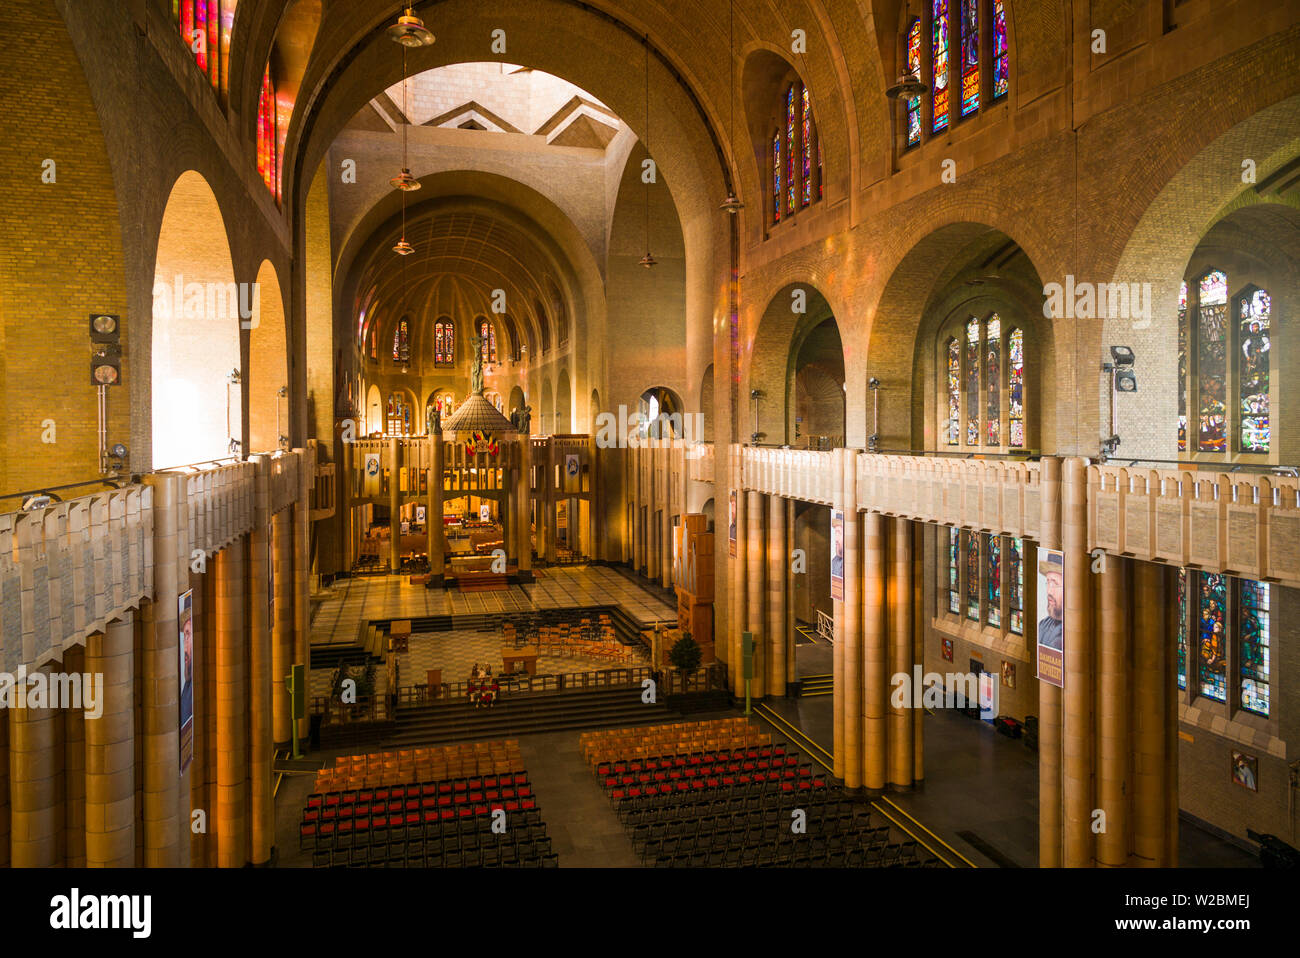 Belgium, Brussels, Koekelberg, Basilique nationale du Sacre-Coeur basilica, interior Stock Photo